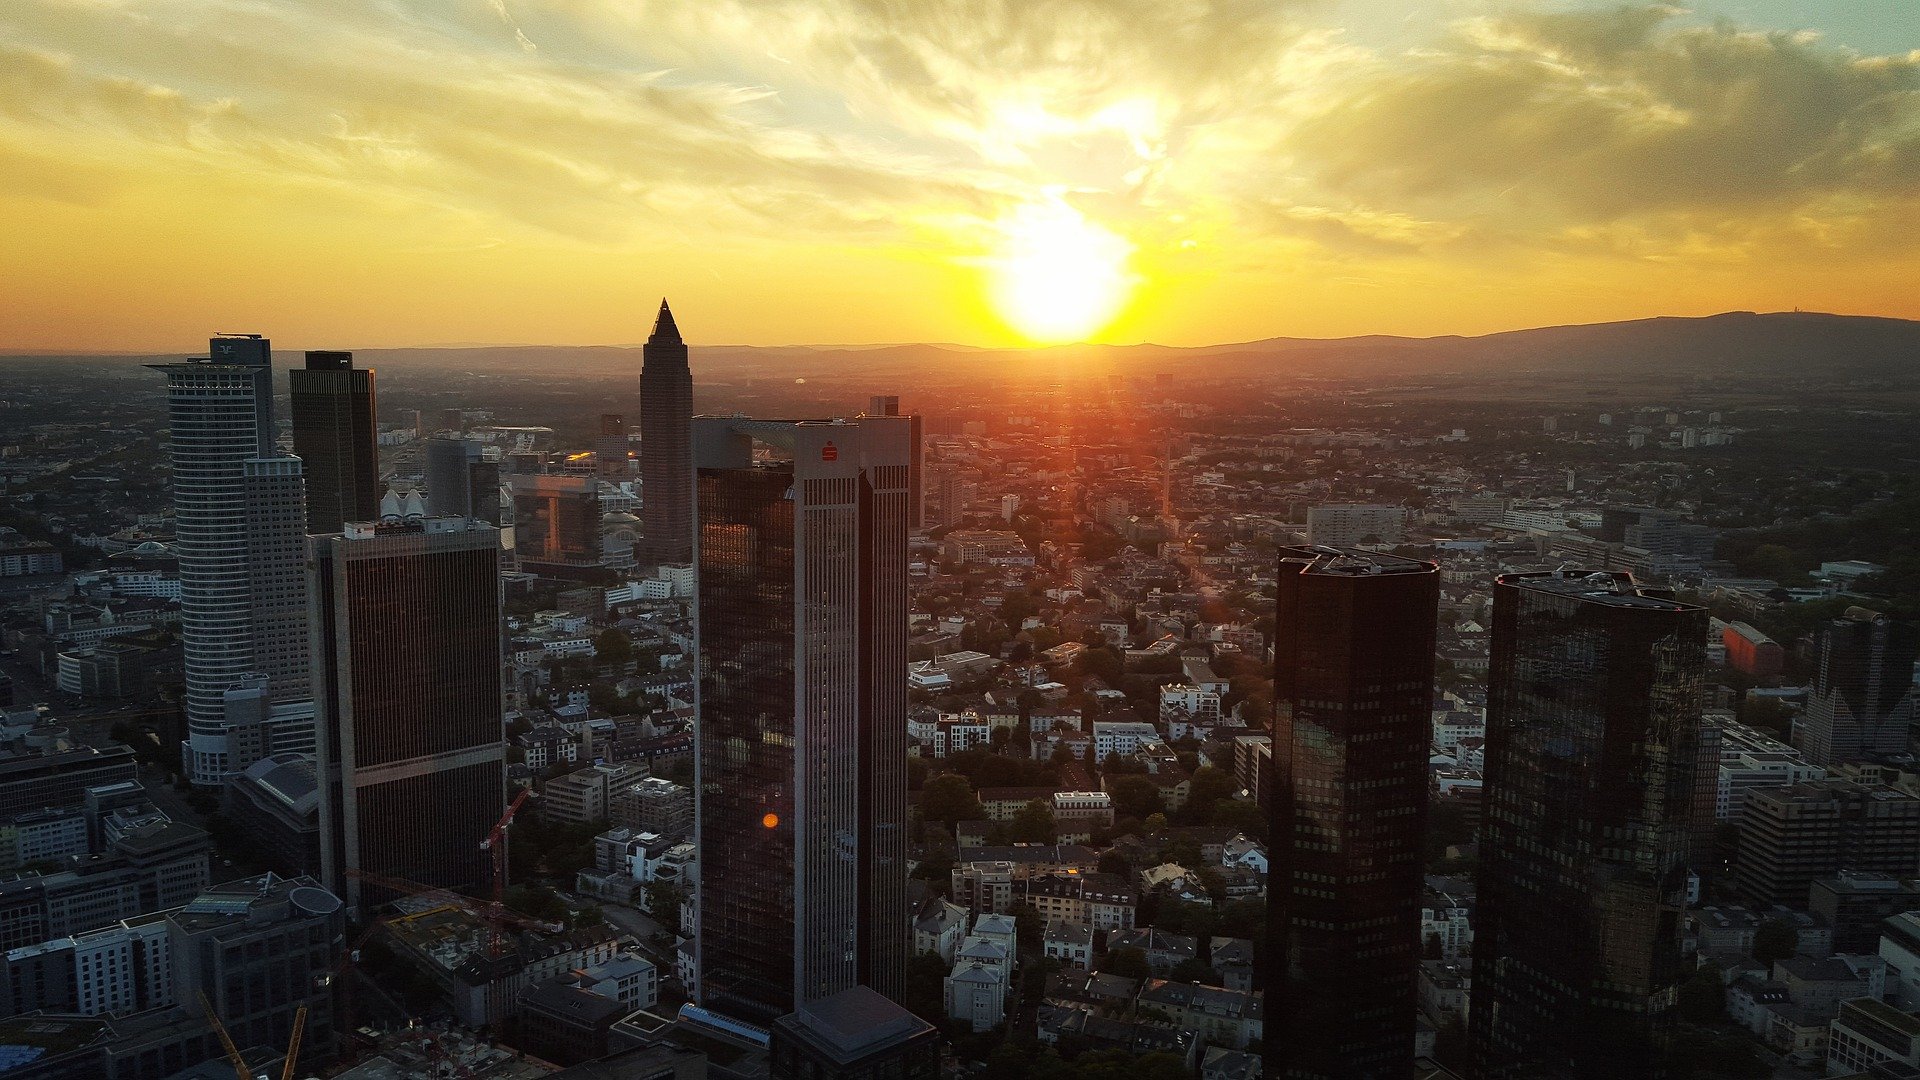 Corona-Krise trifft Standort Frankfurt massiv